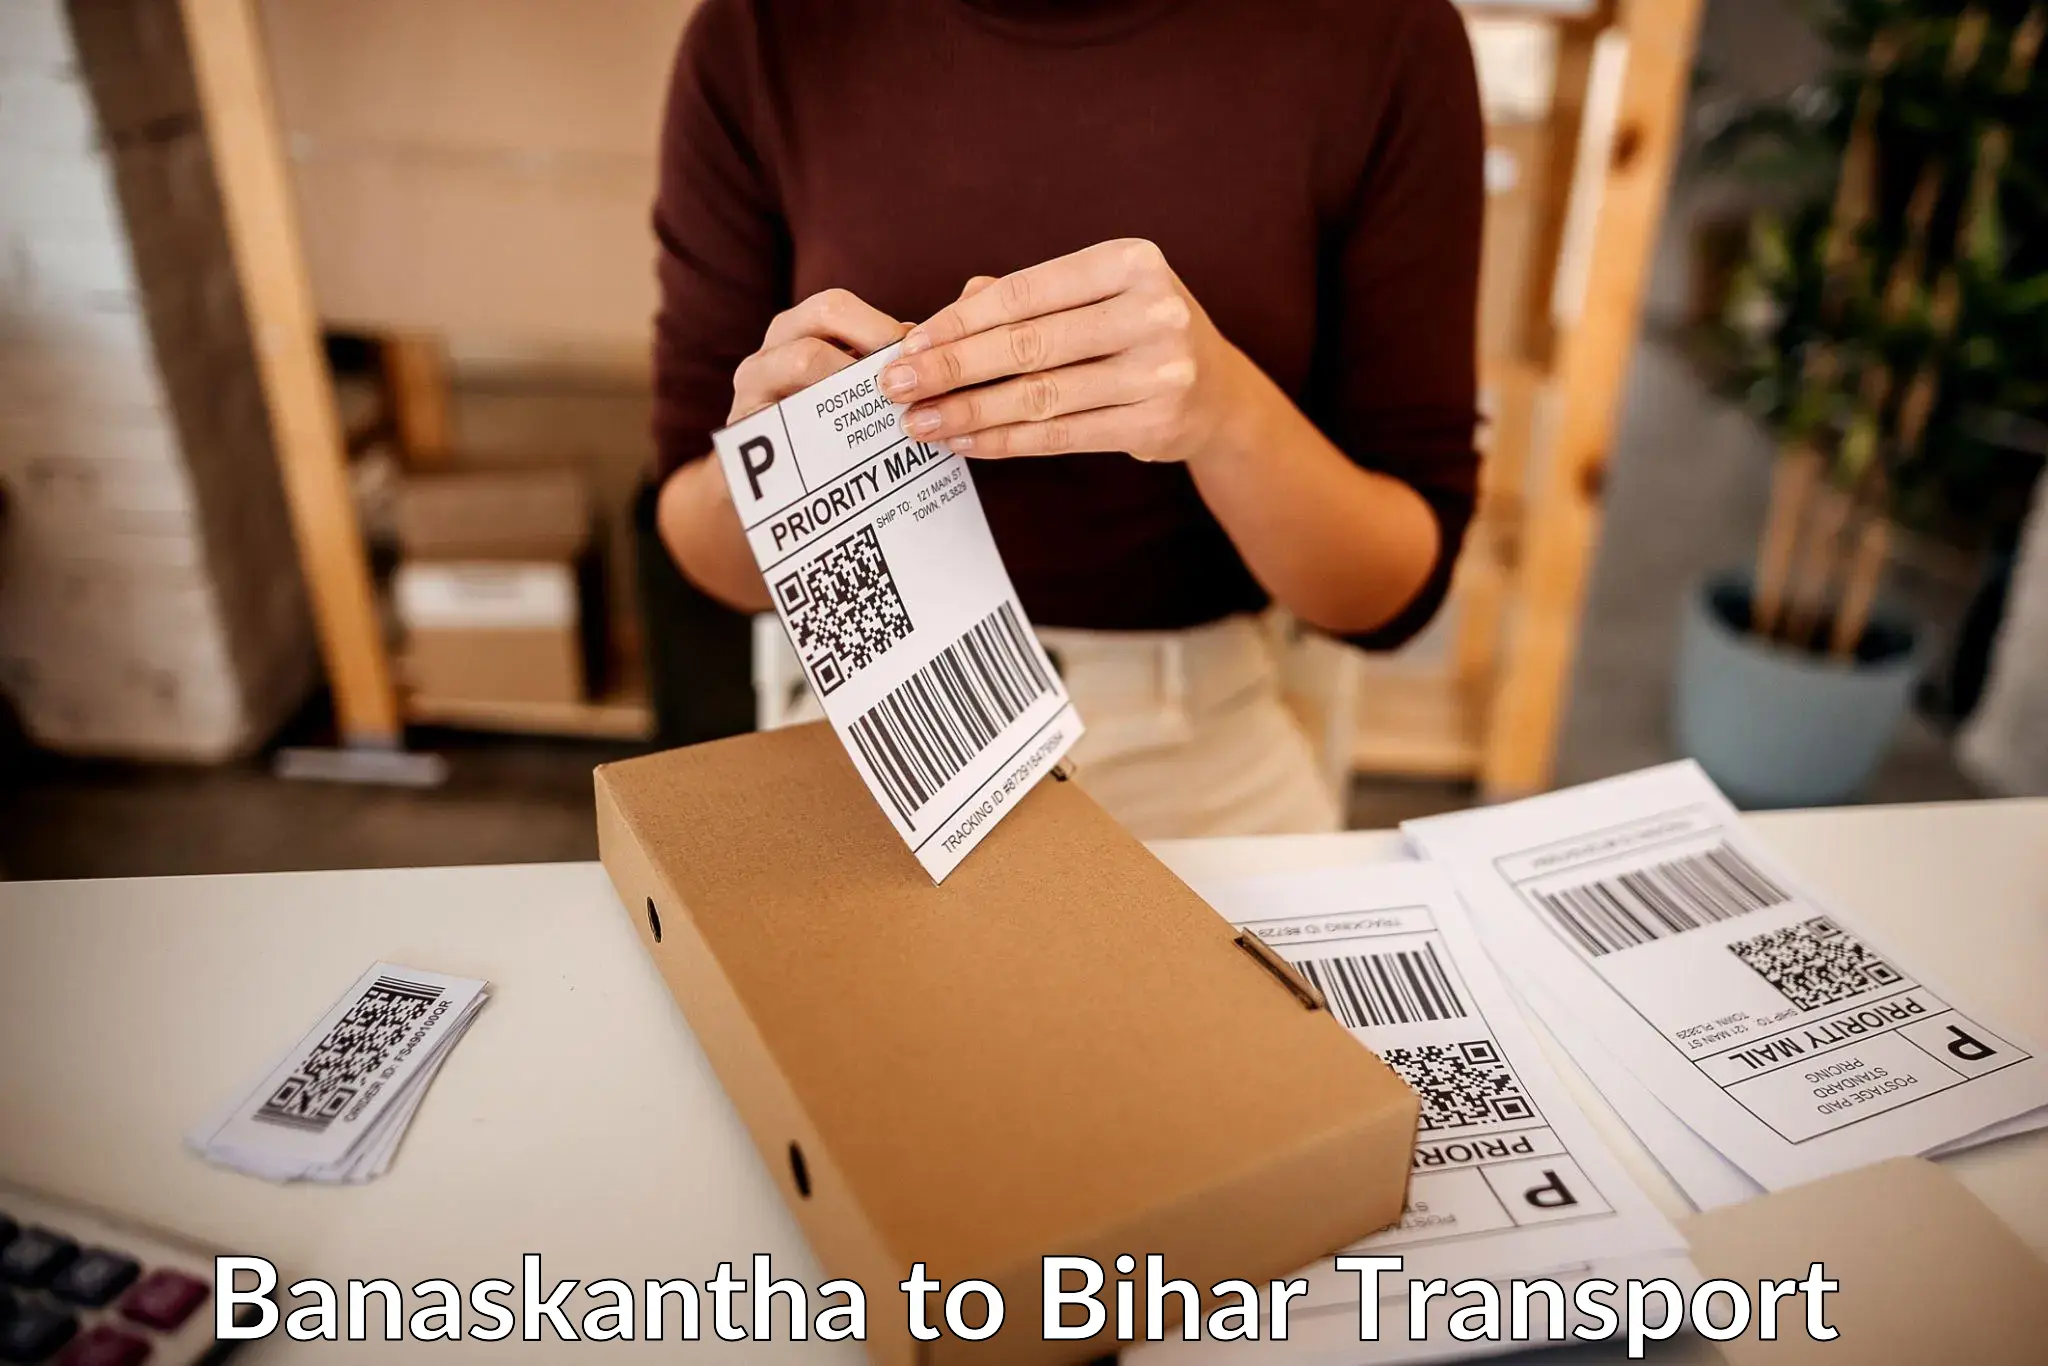 Goods delivery service Banaskantha to Khodaganj